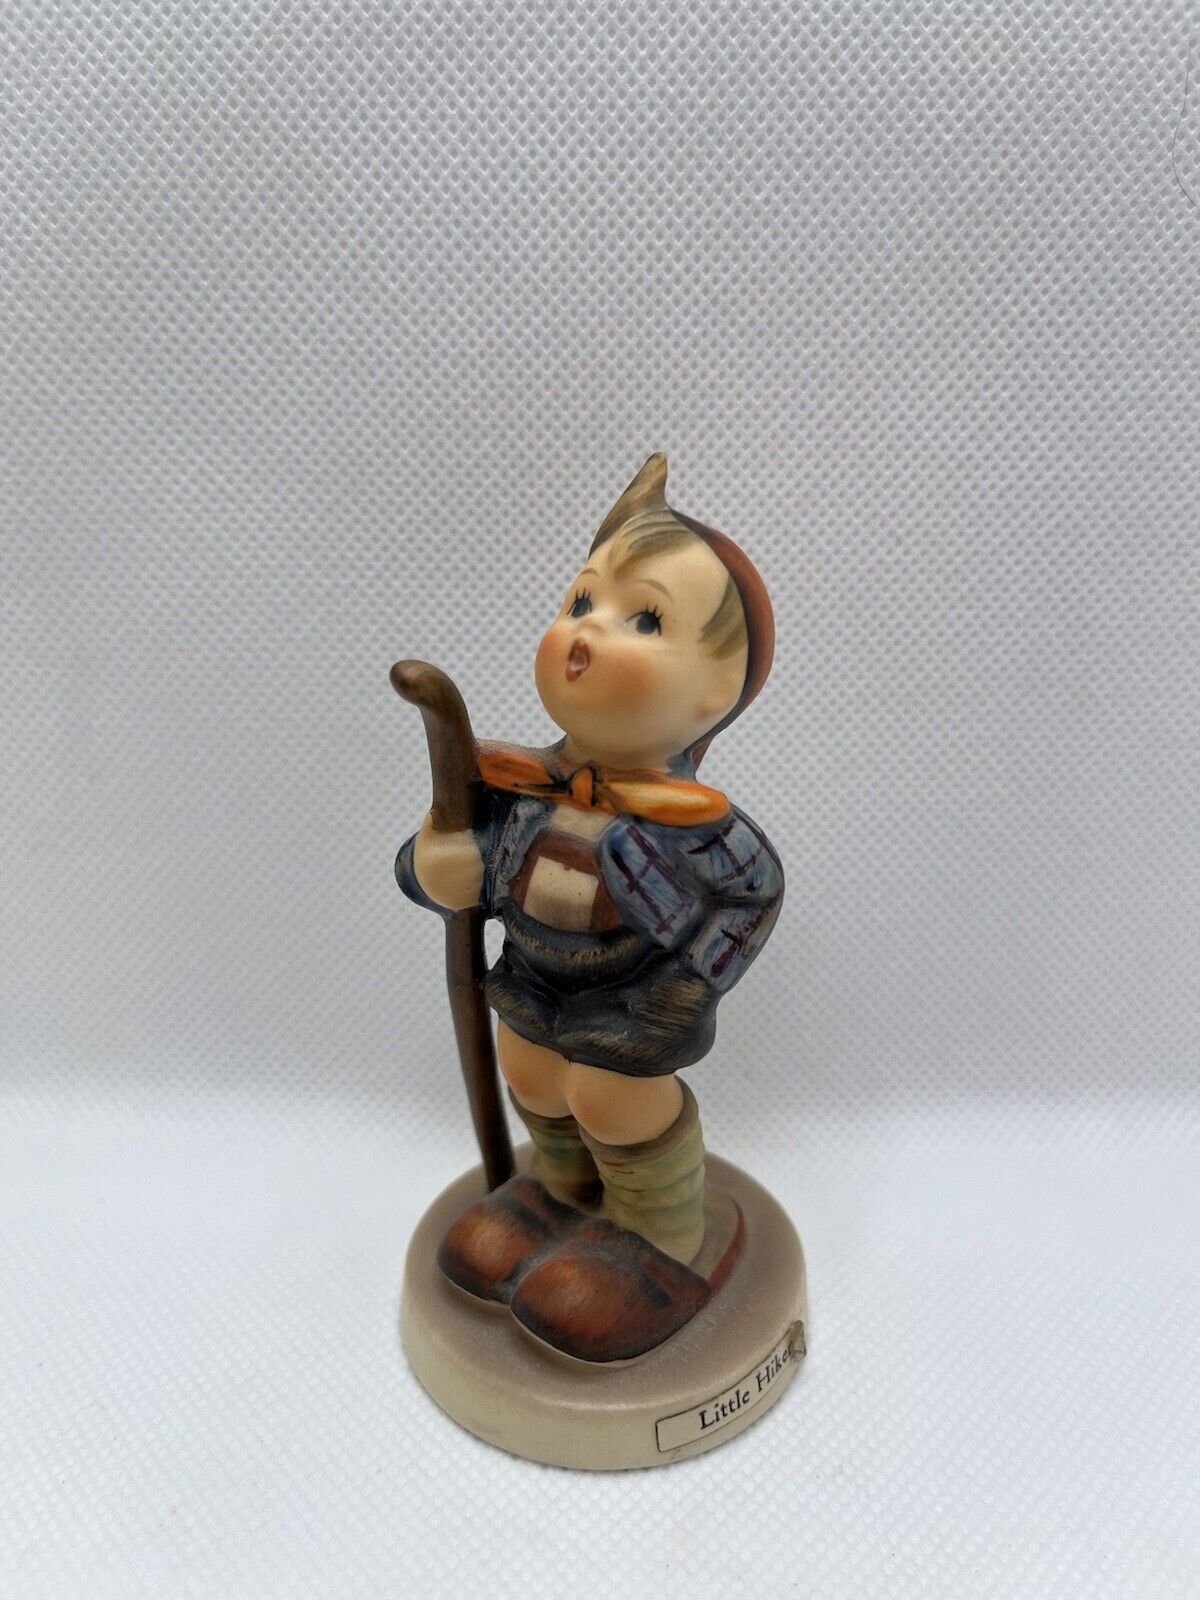 Goebel M.I. Hummel Figurine Little Hiker Boy # 16/1 TMK-5 Germany